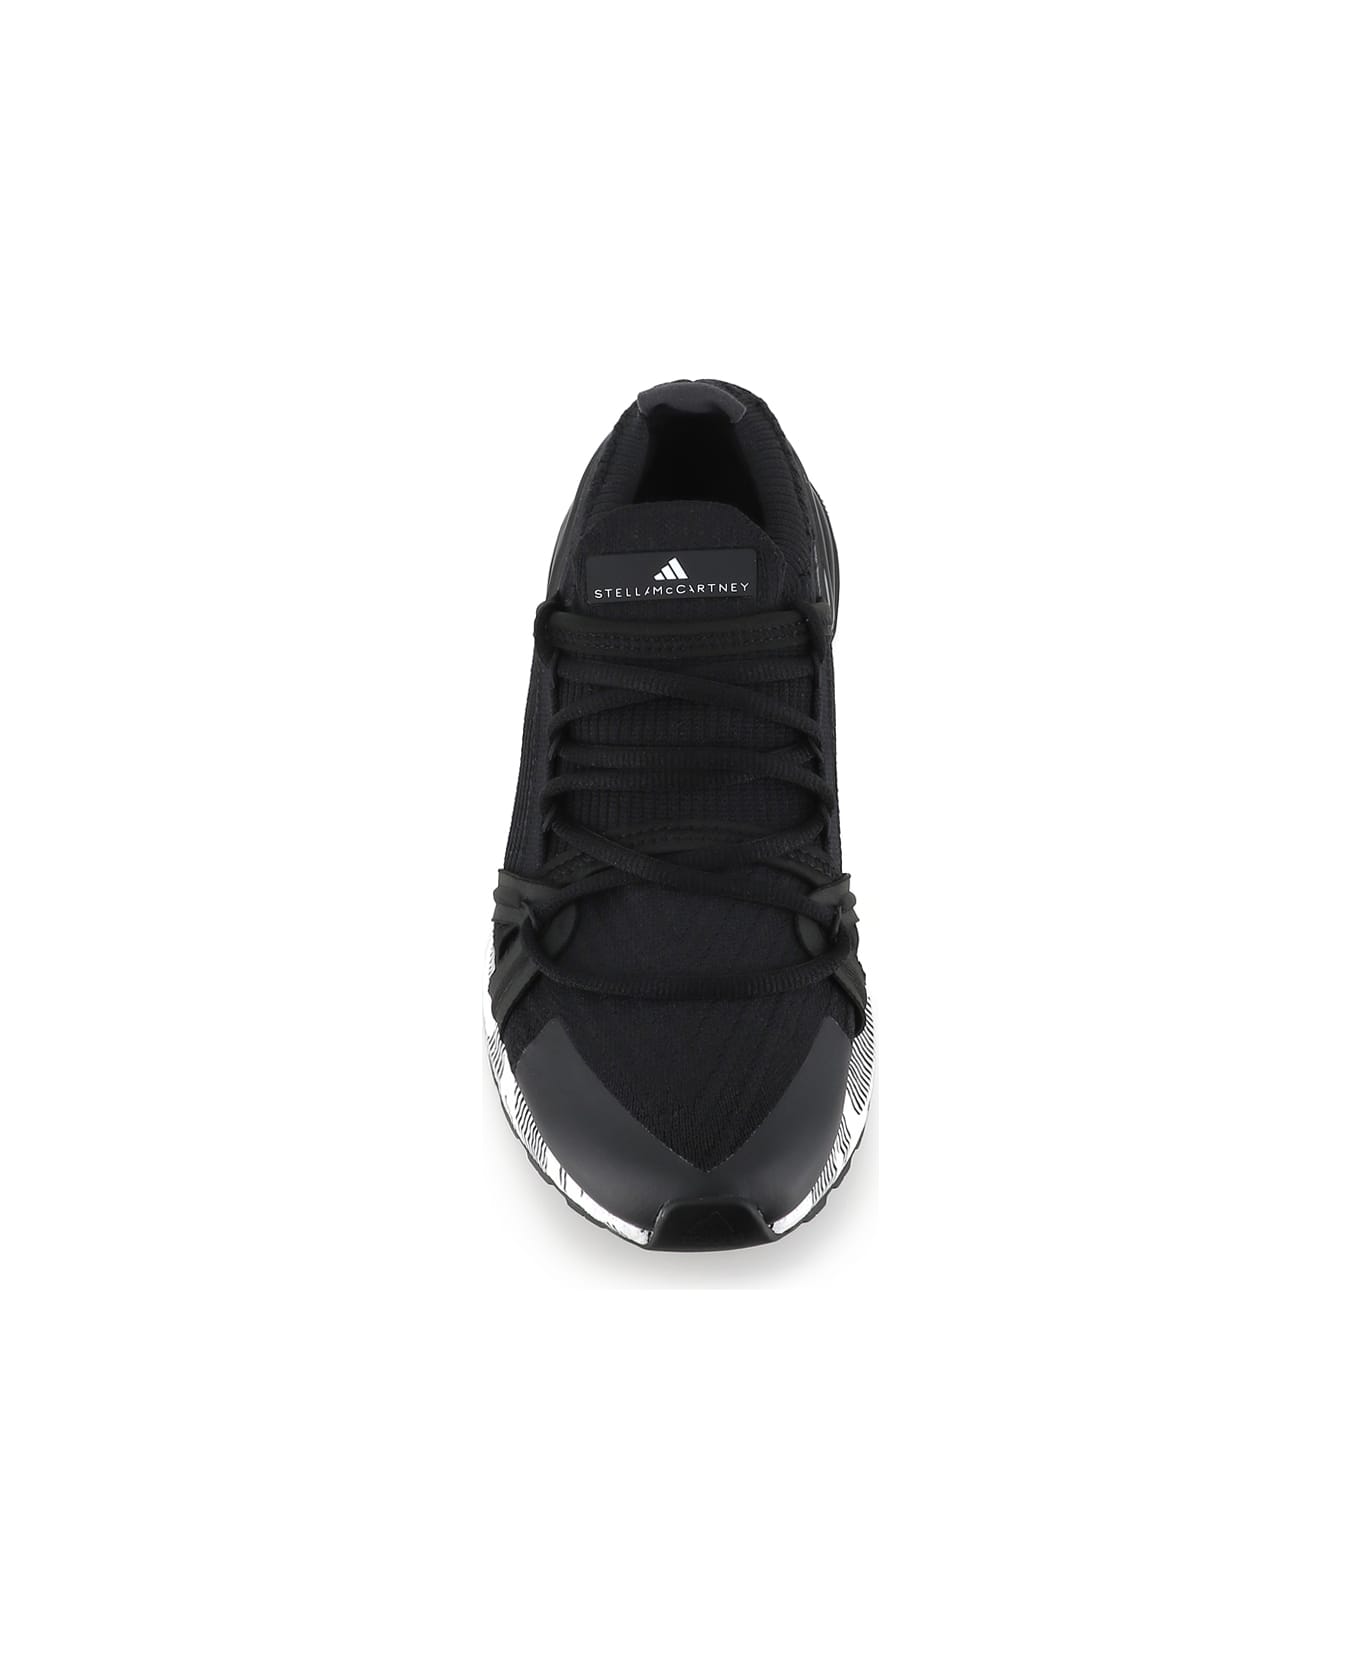 Adidas by Stella McCartney Ultraboost 20 Woman - Black/white